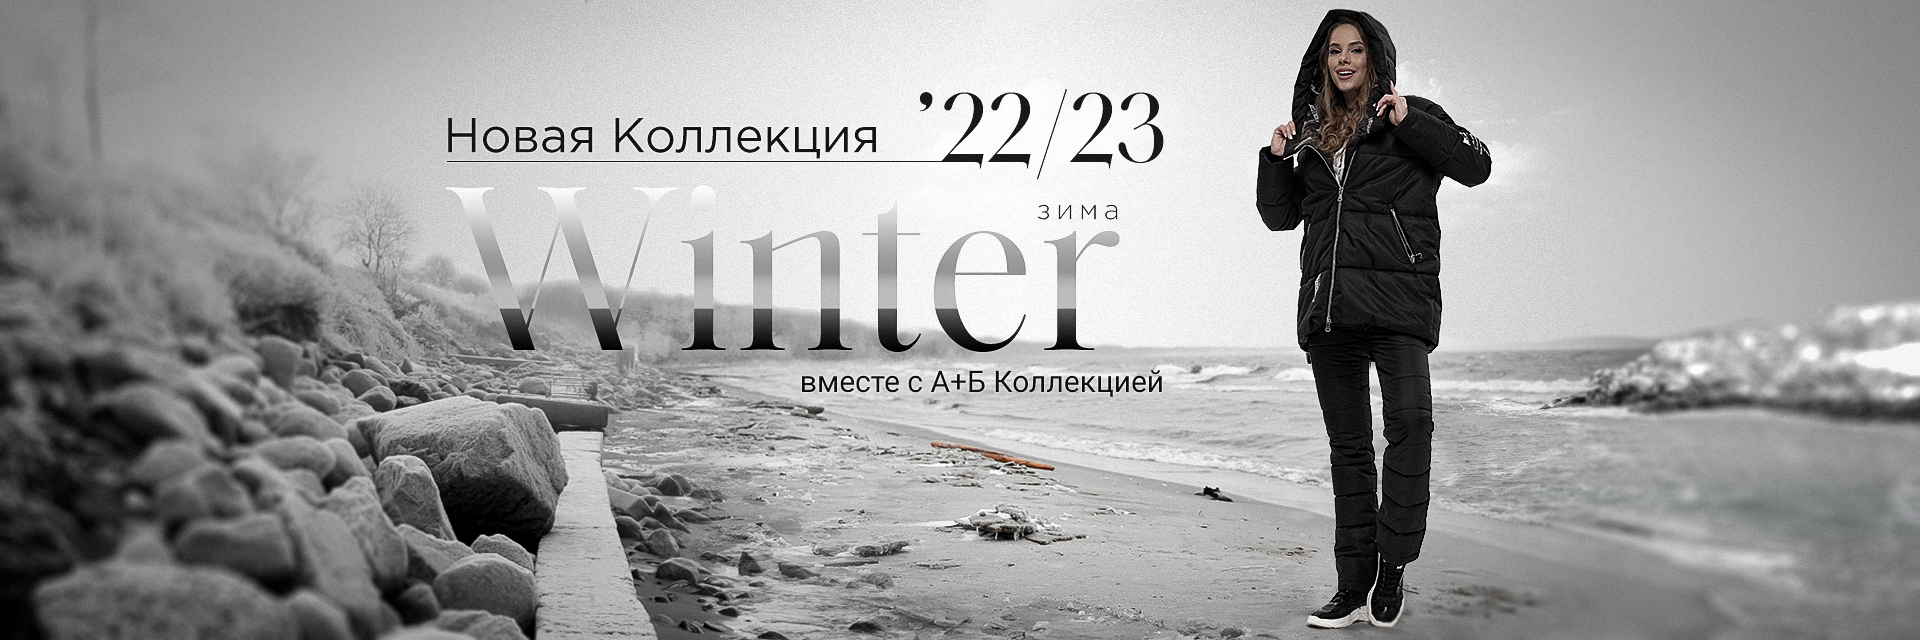 Winter_2022-23_2